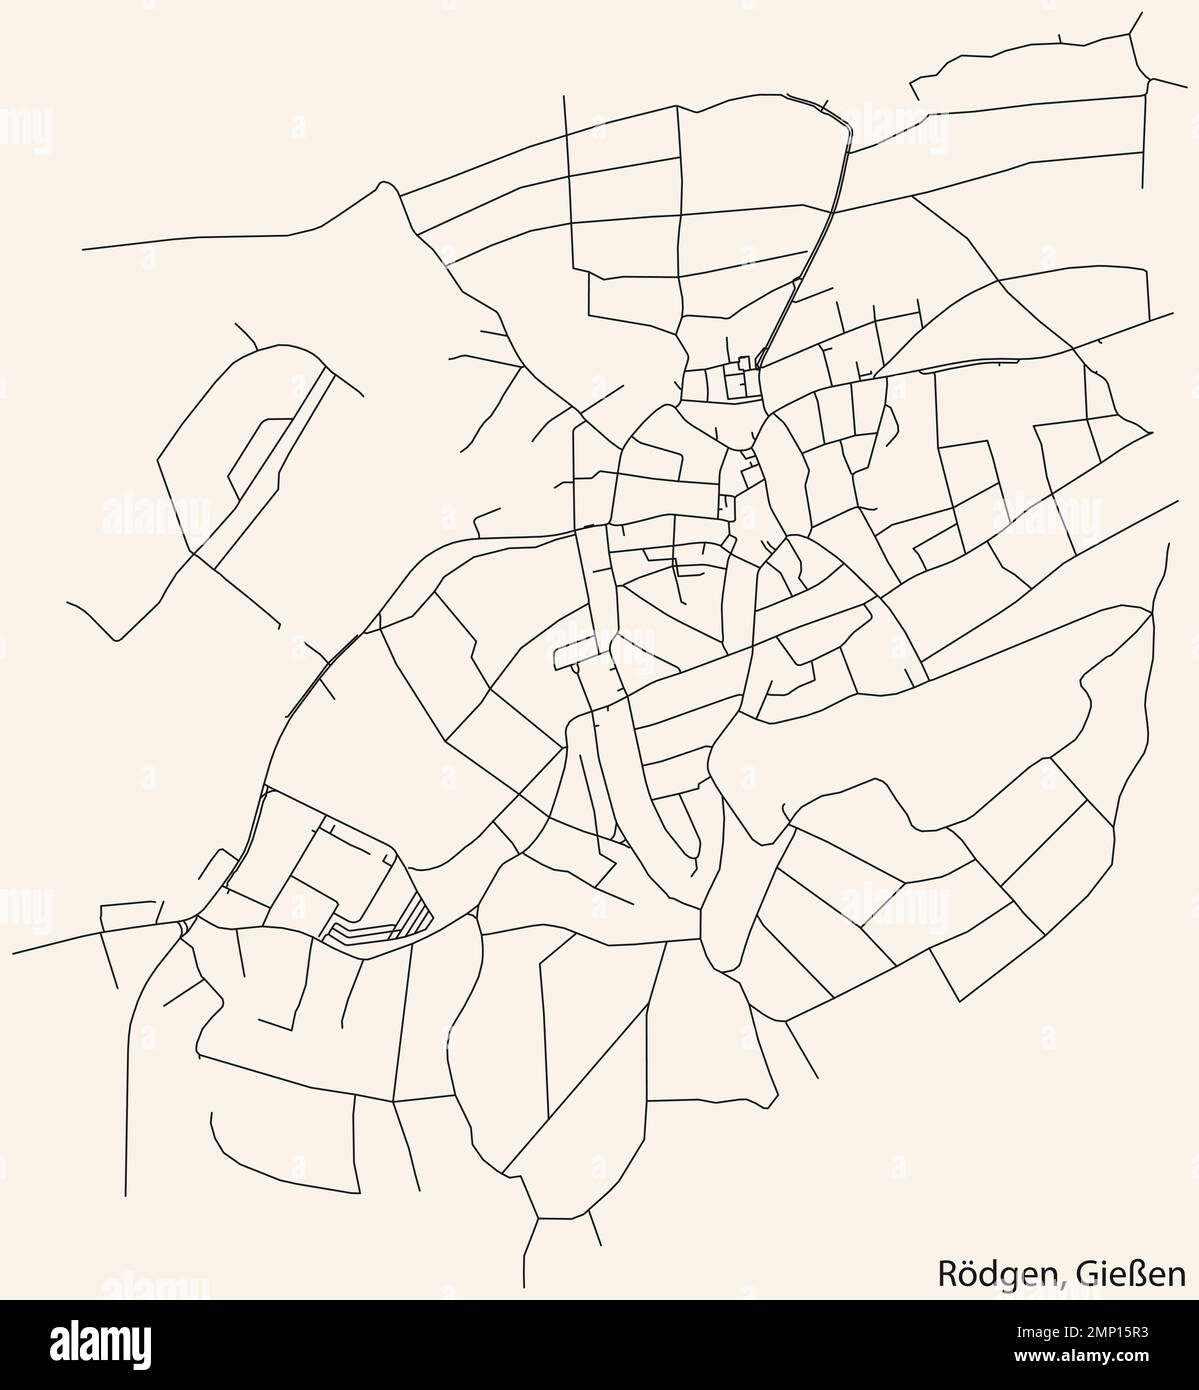 Street roads map of the RÖDGEN DISTRICT, GIESSEN Stock Vector